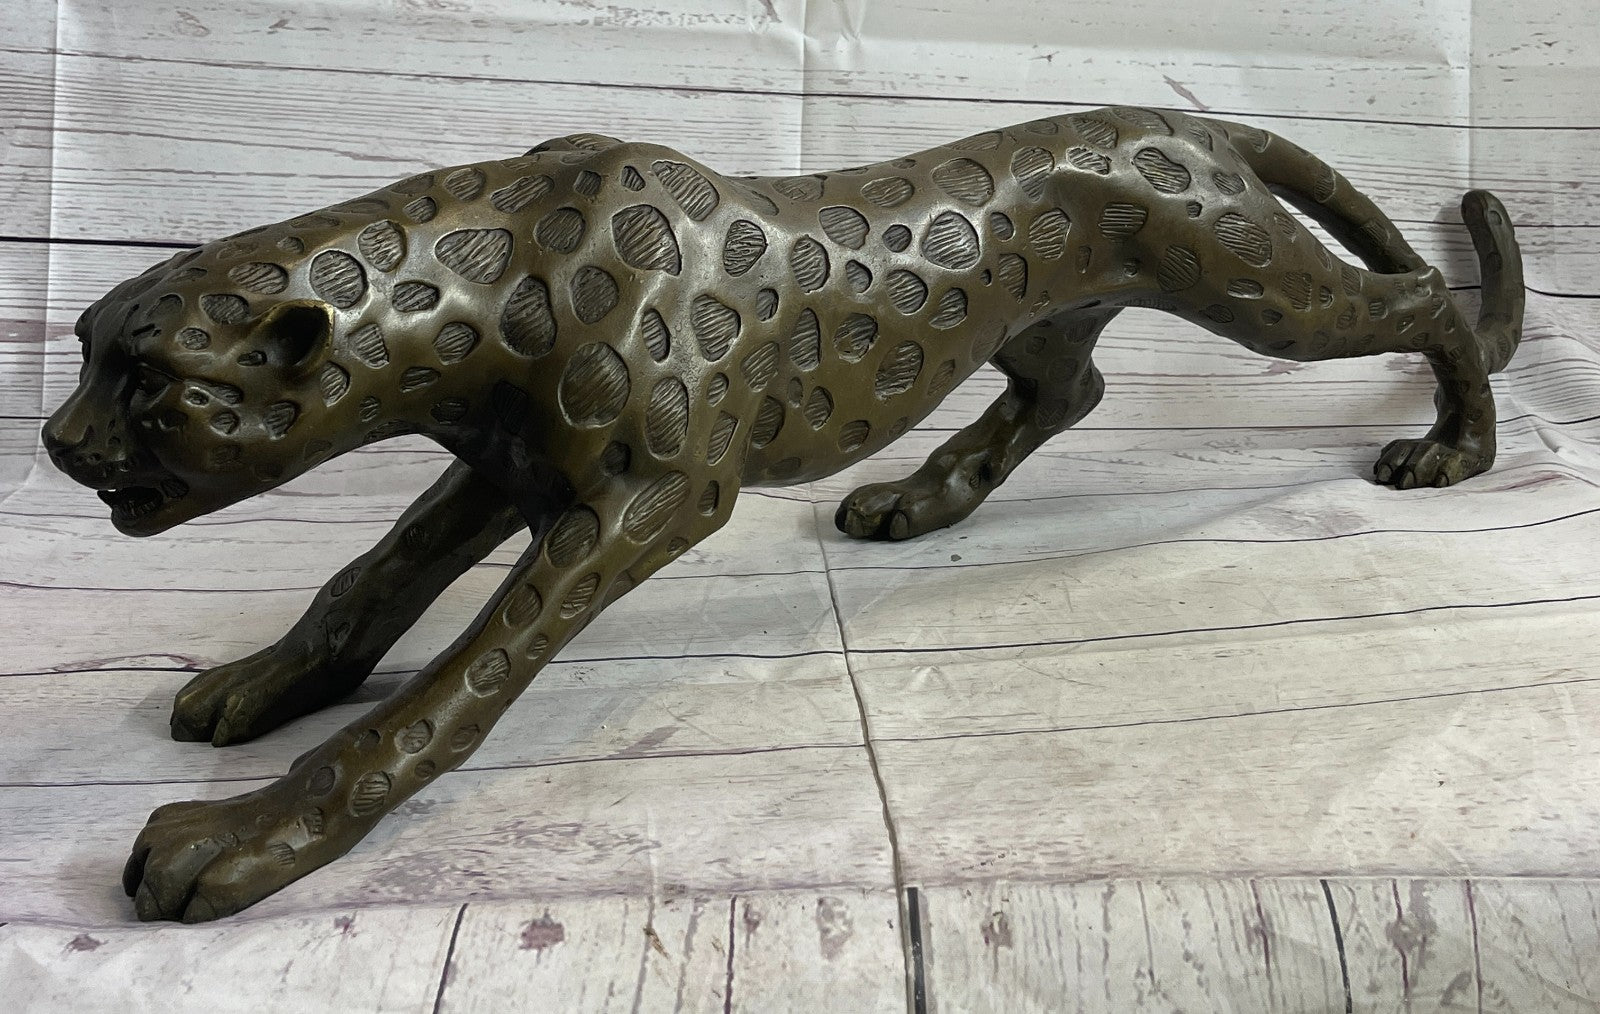 Sitting Cheetah Statue Bronze Cheetah Sculpture Art Deco Bronze Sculpture  Animal Wildlife Sculpture Sitting Jaguar Sculpture Animal Art Deco -   Canada